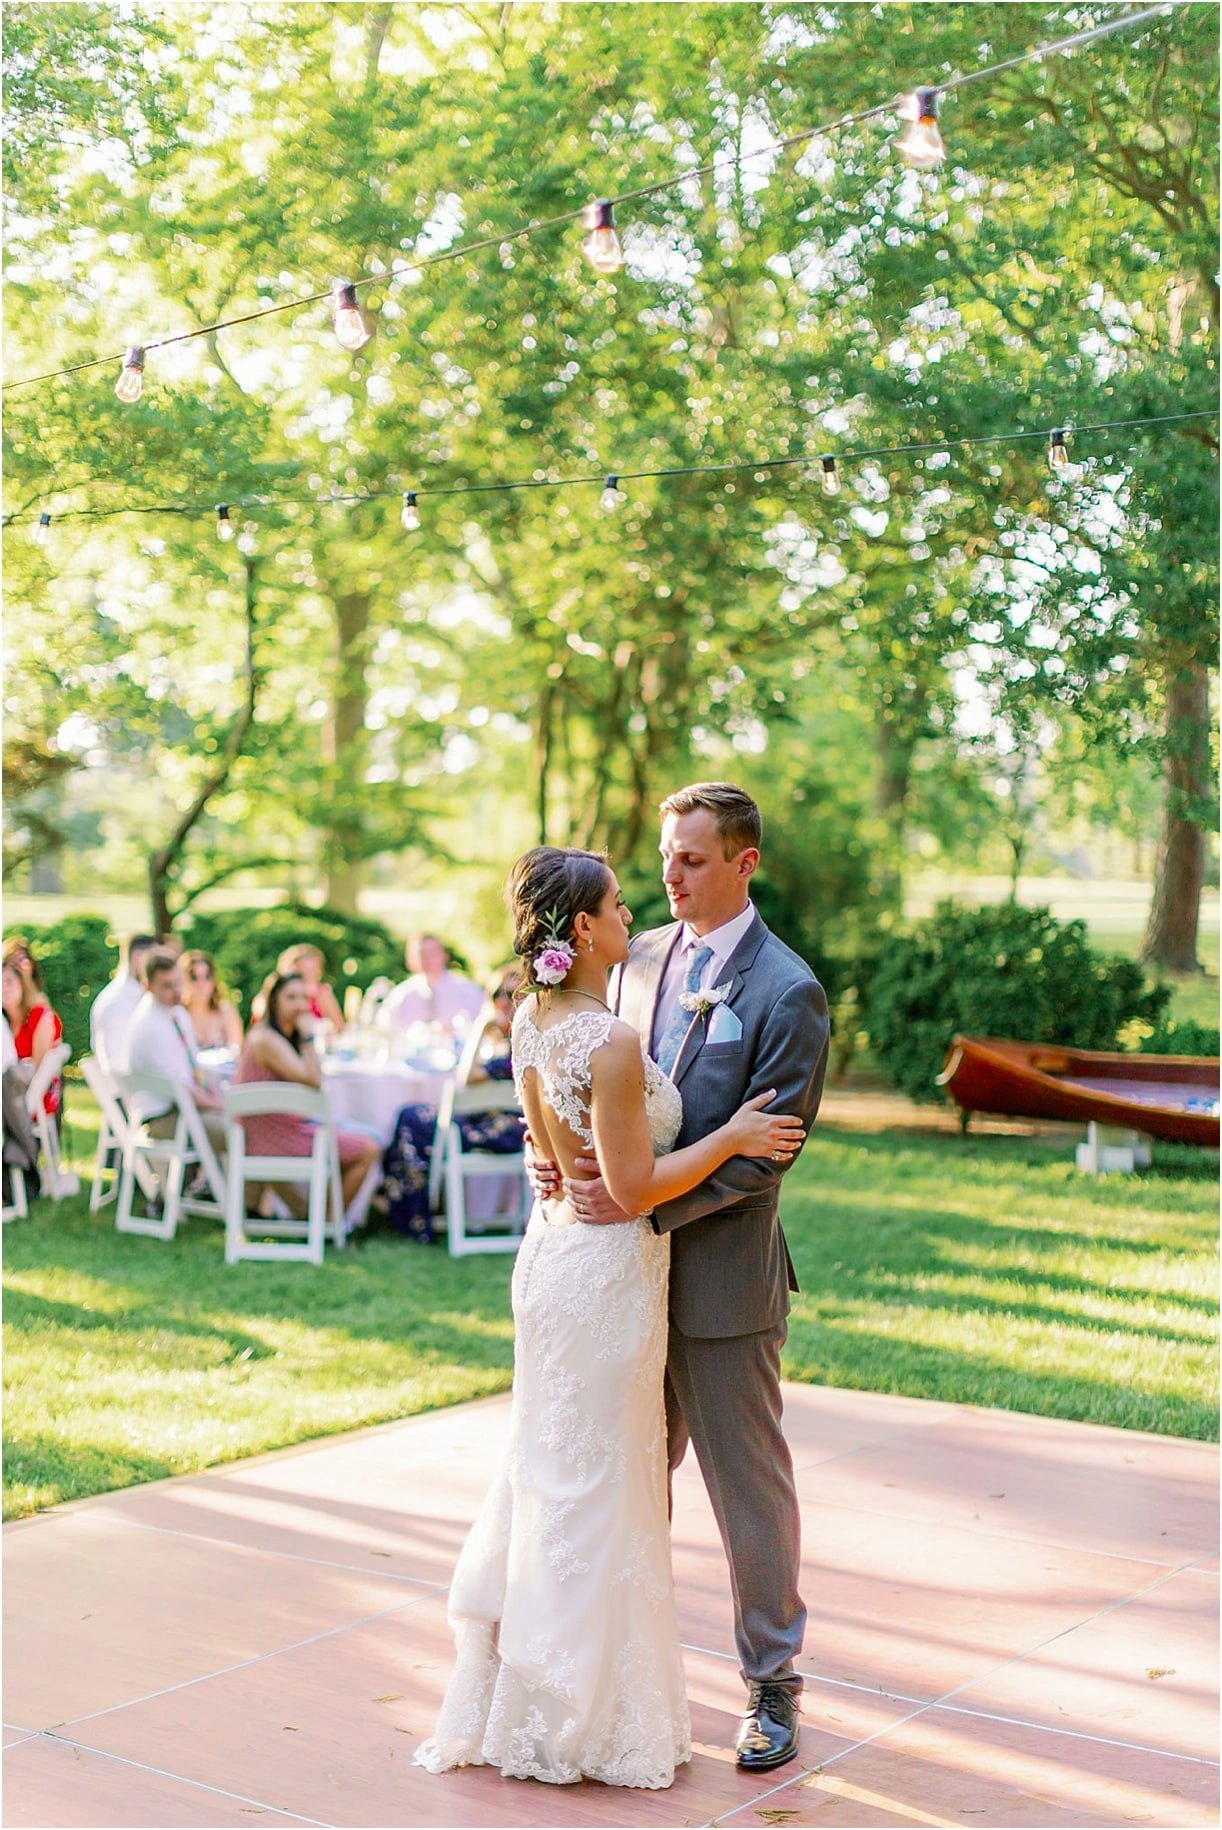 Cape Charles Wedding Venues | Blue Wedding | Hill City Bride Virginia Weddings Blog | First Dance